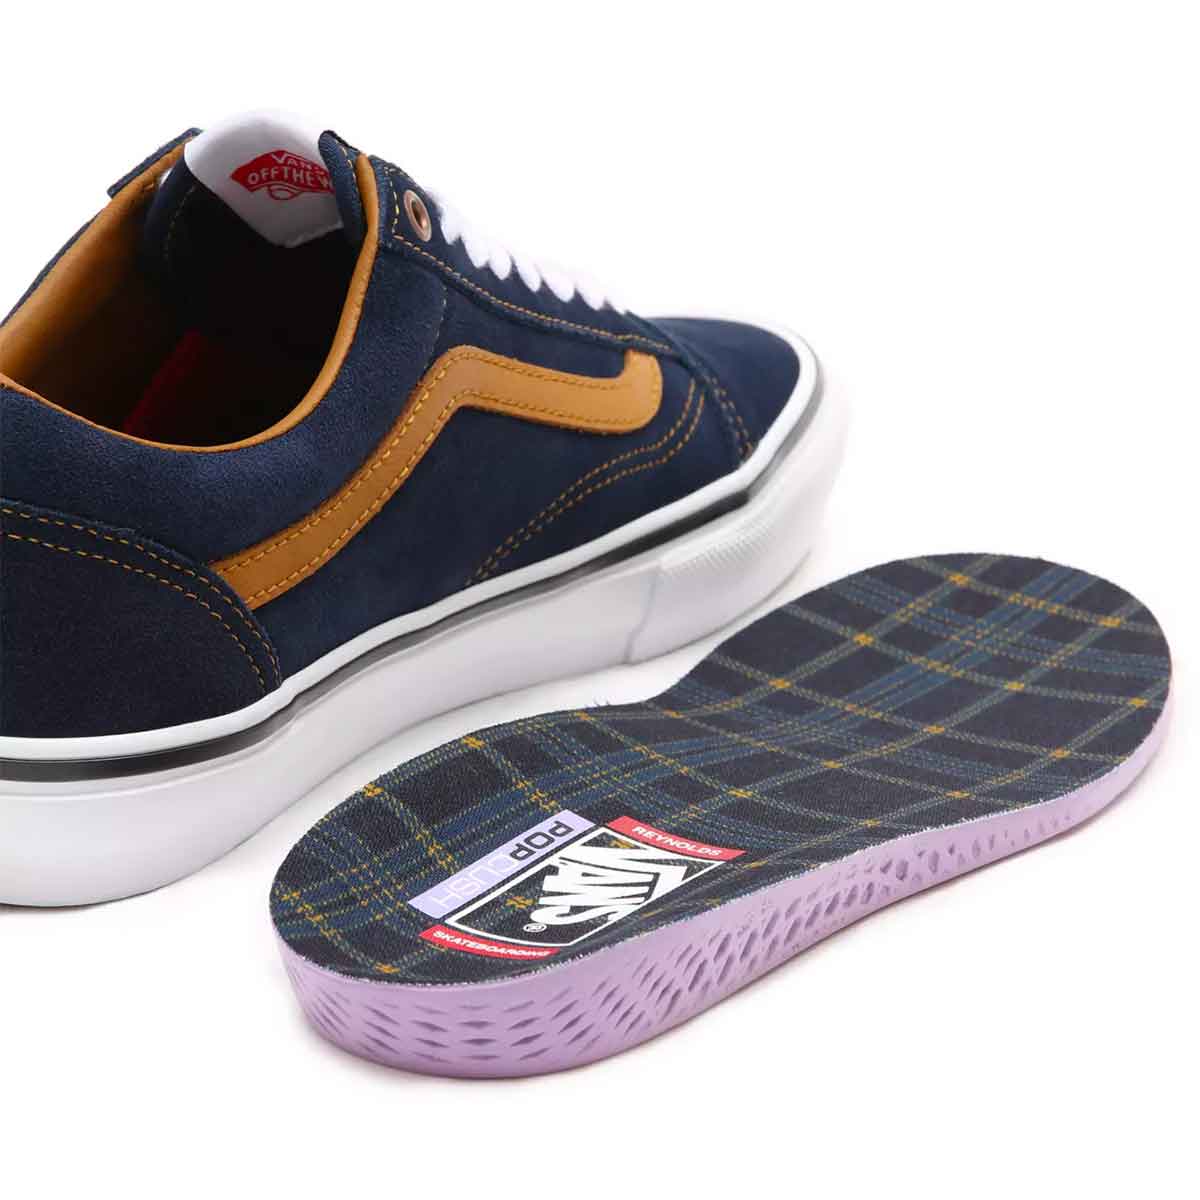 herhaling Verduisteren venijn Vans Skate Andrew Reynolds Old Skool Pro Shoes - Navy/Golden Brown | SoCal  Skateshop